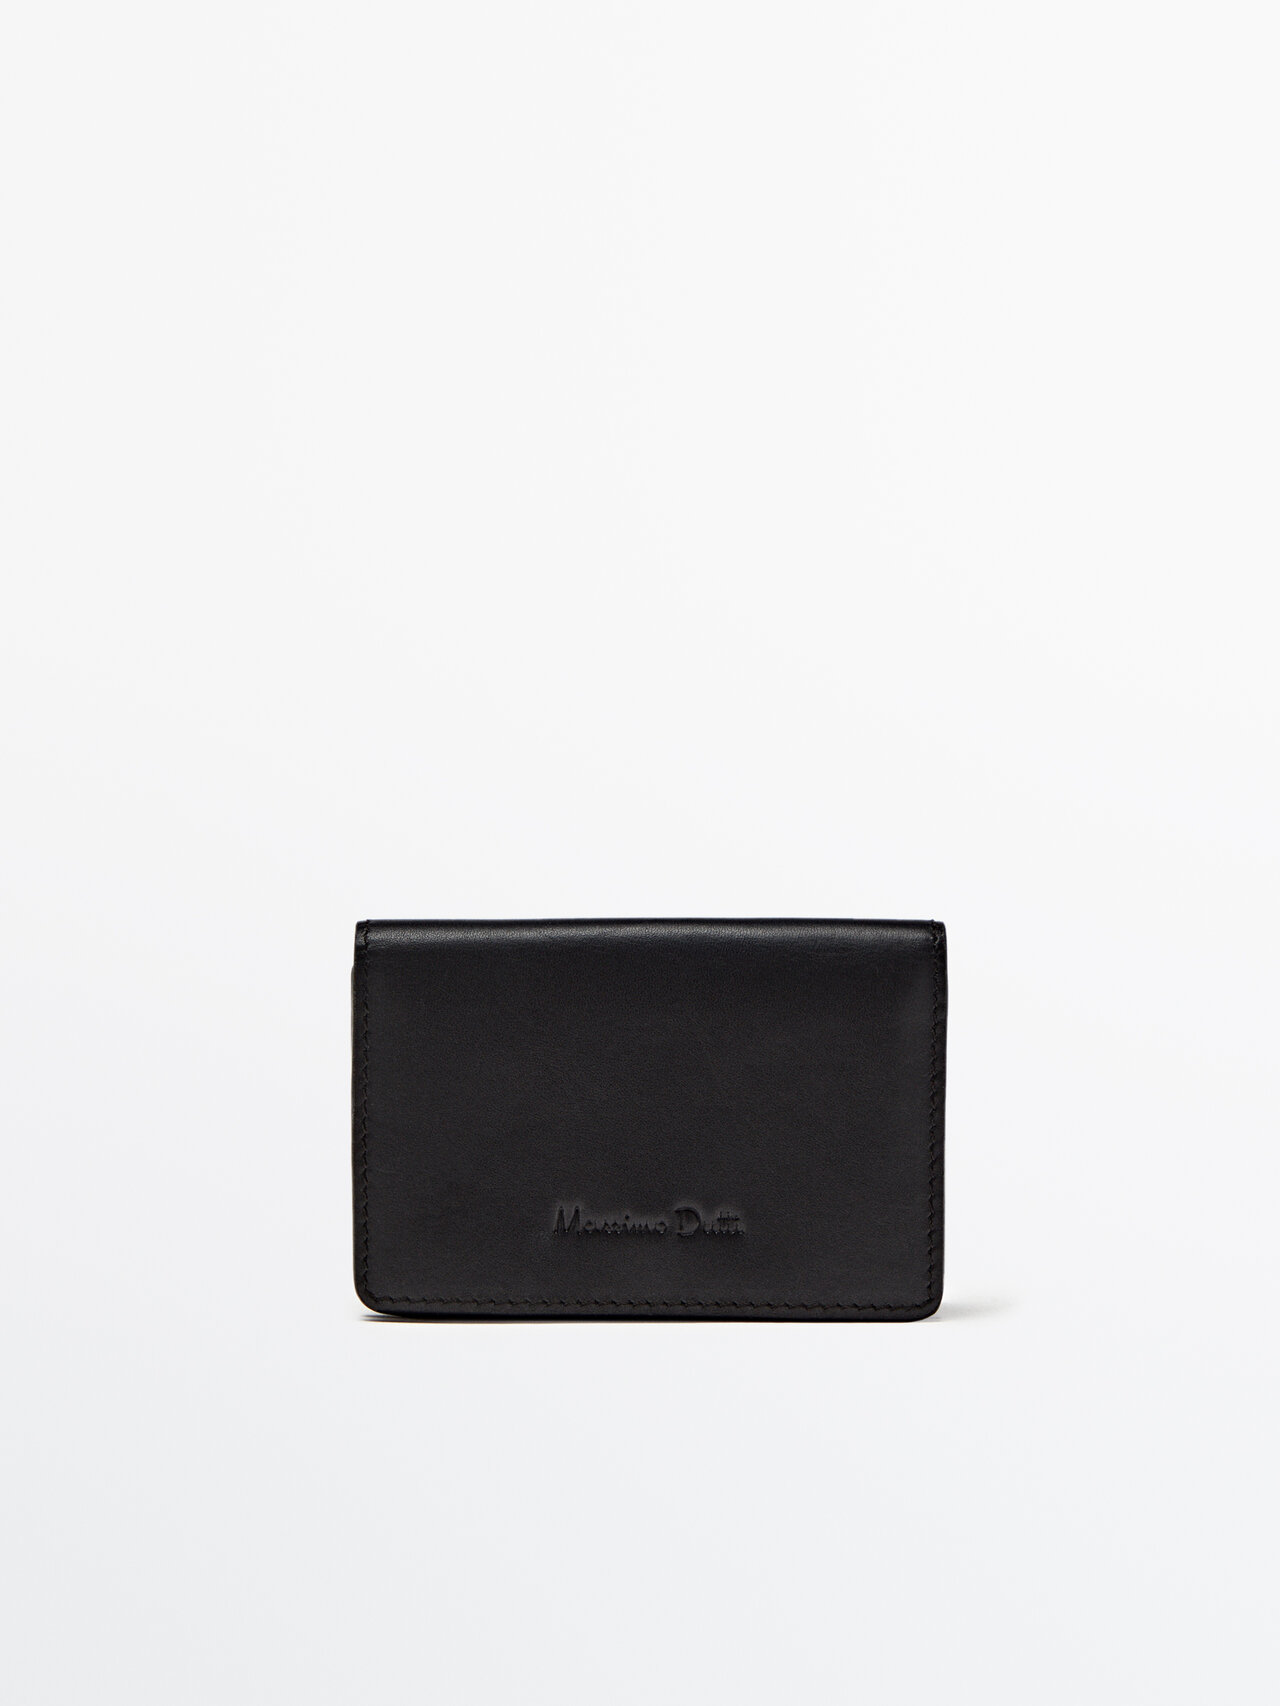 Massimo Dutti Nappa Leather Wallet In Black